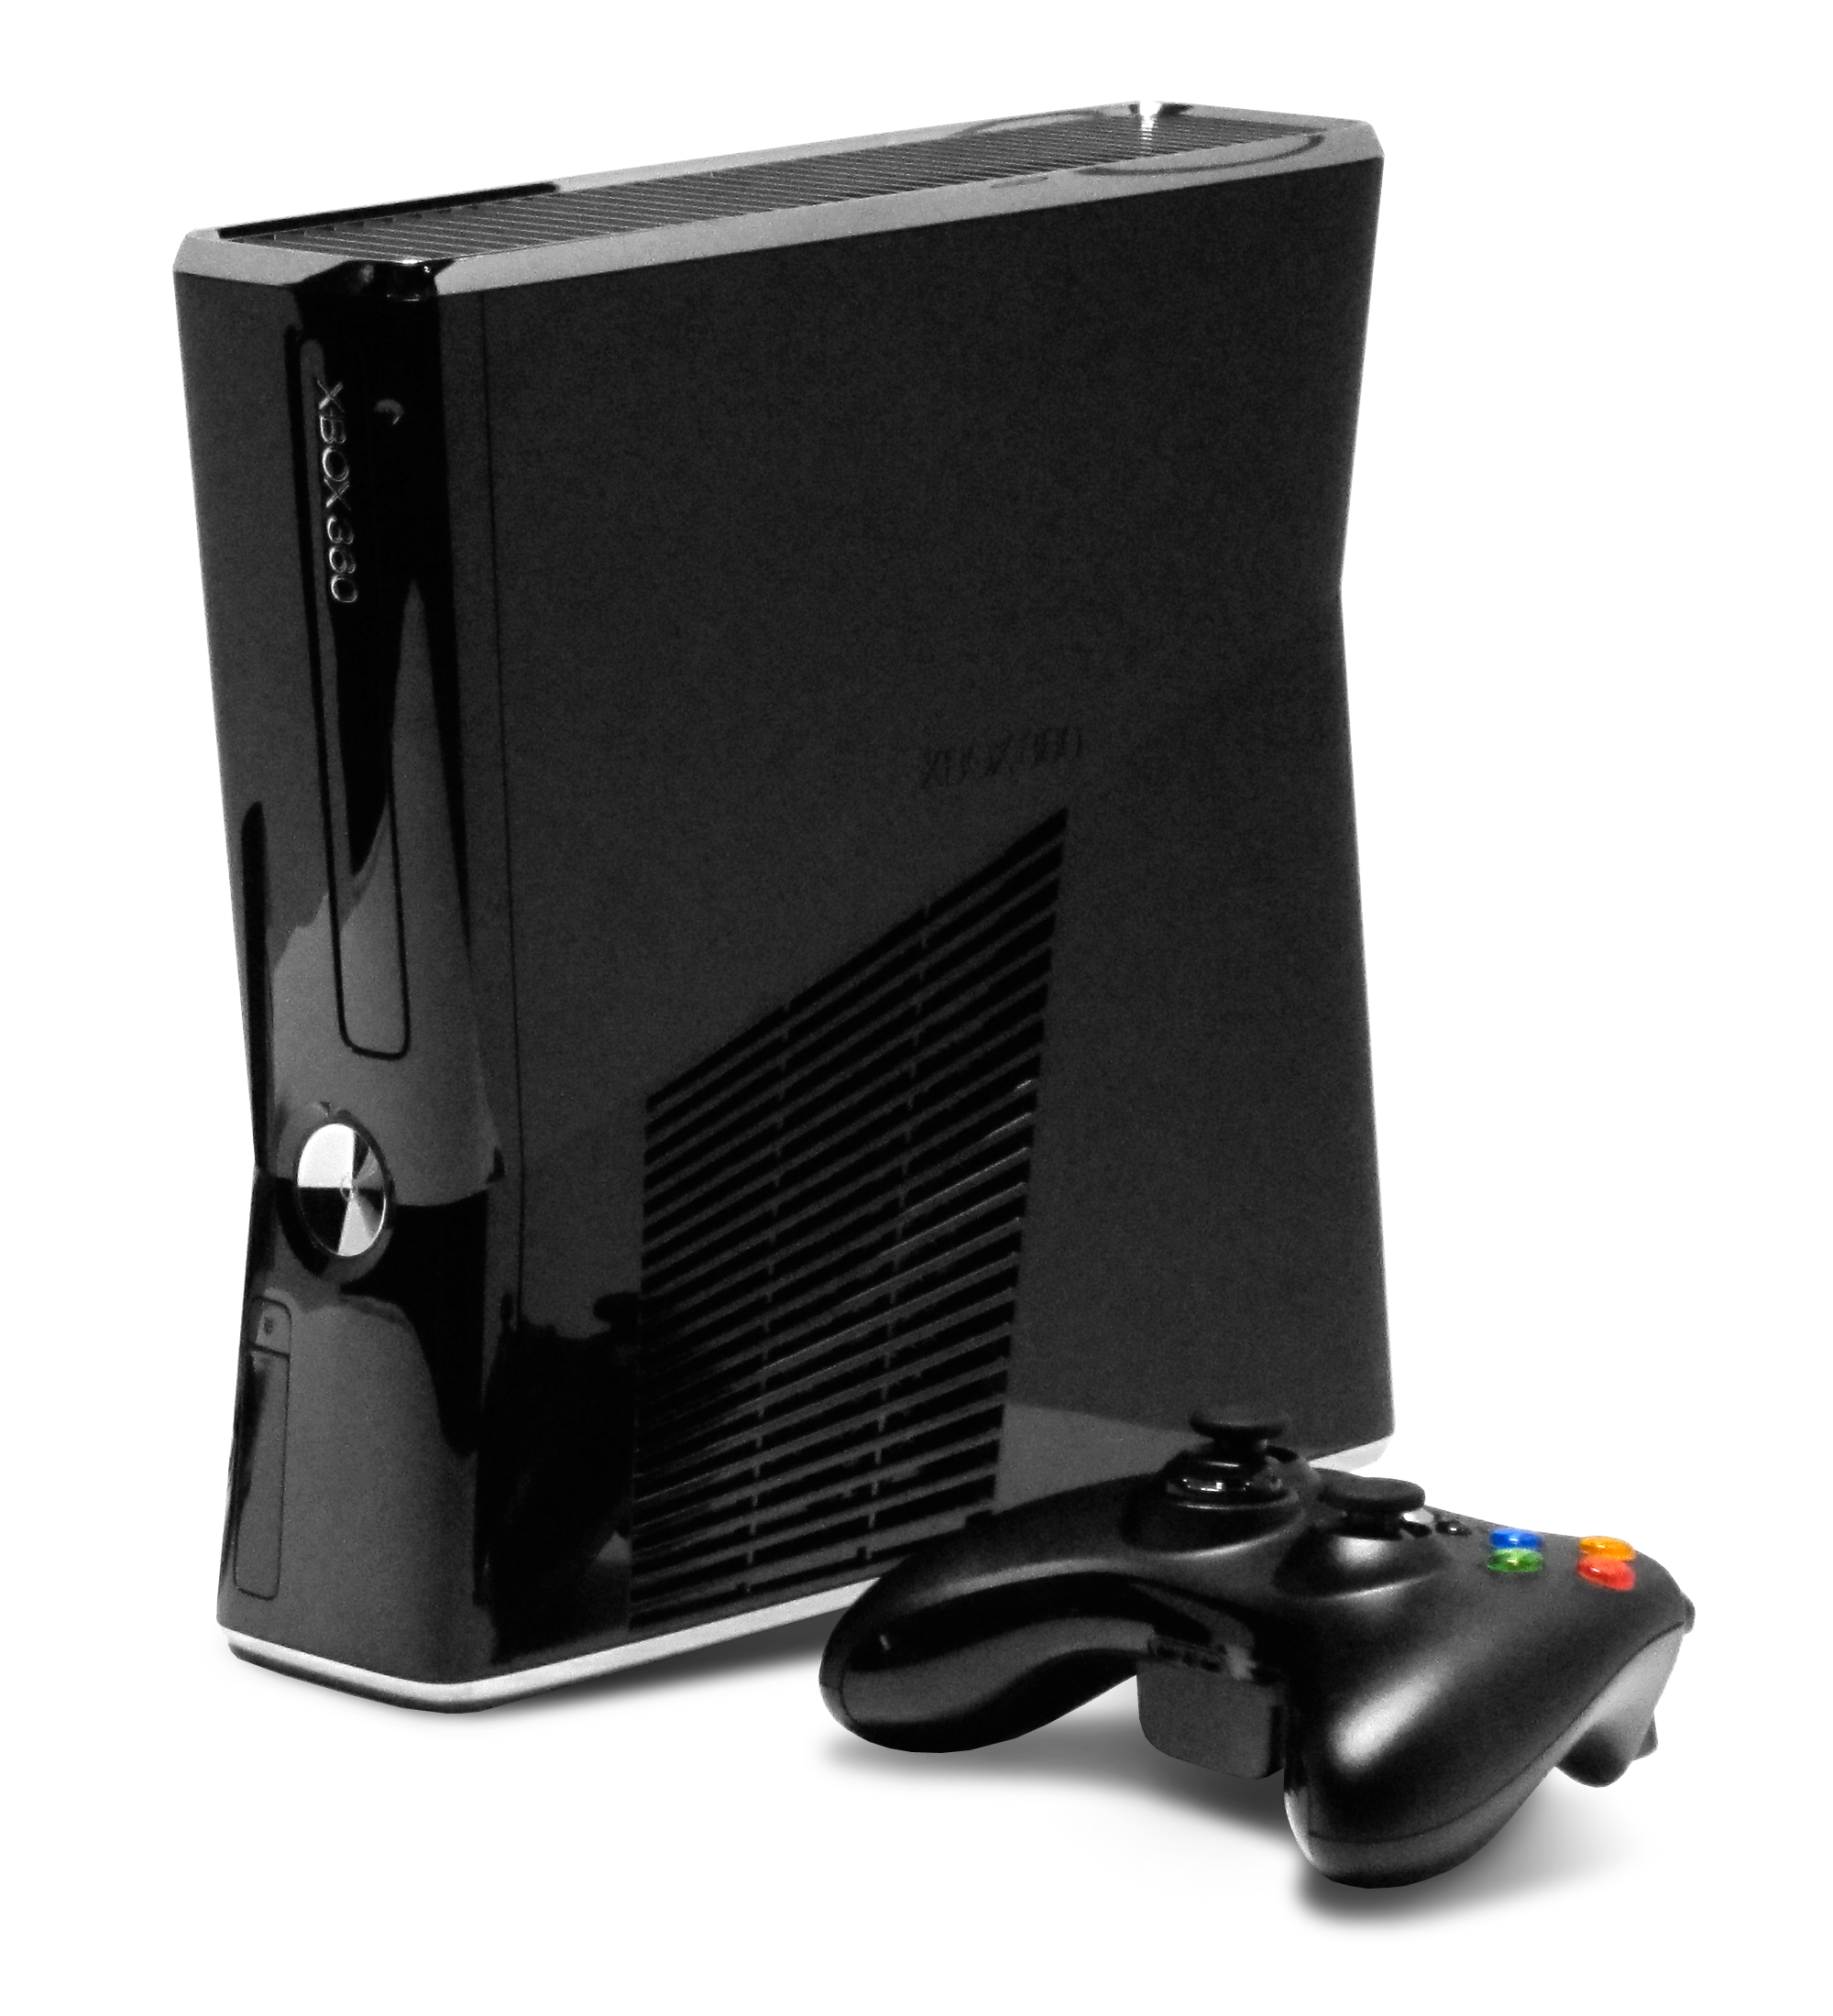 Xbox One | Xbox One Images, P